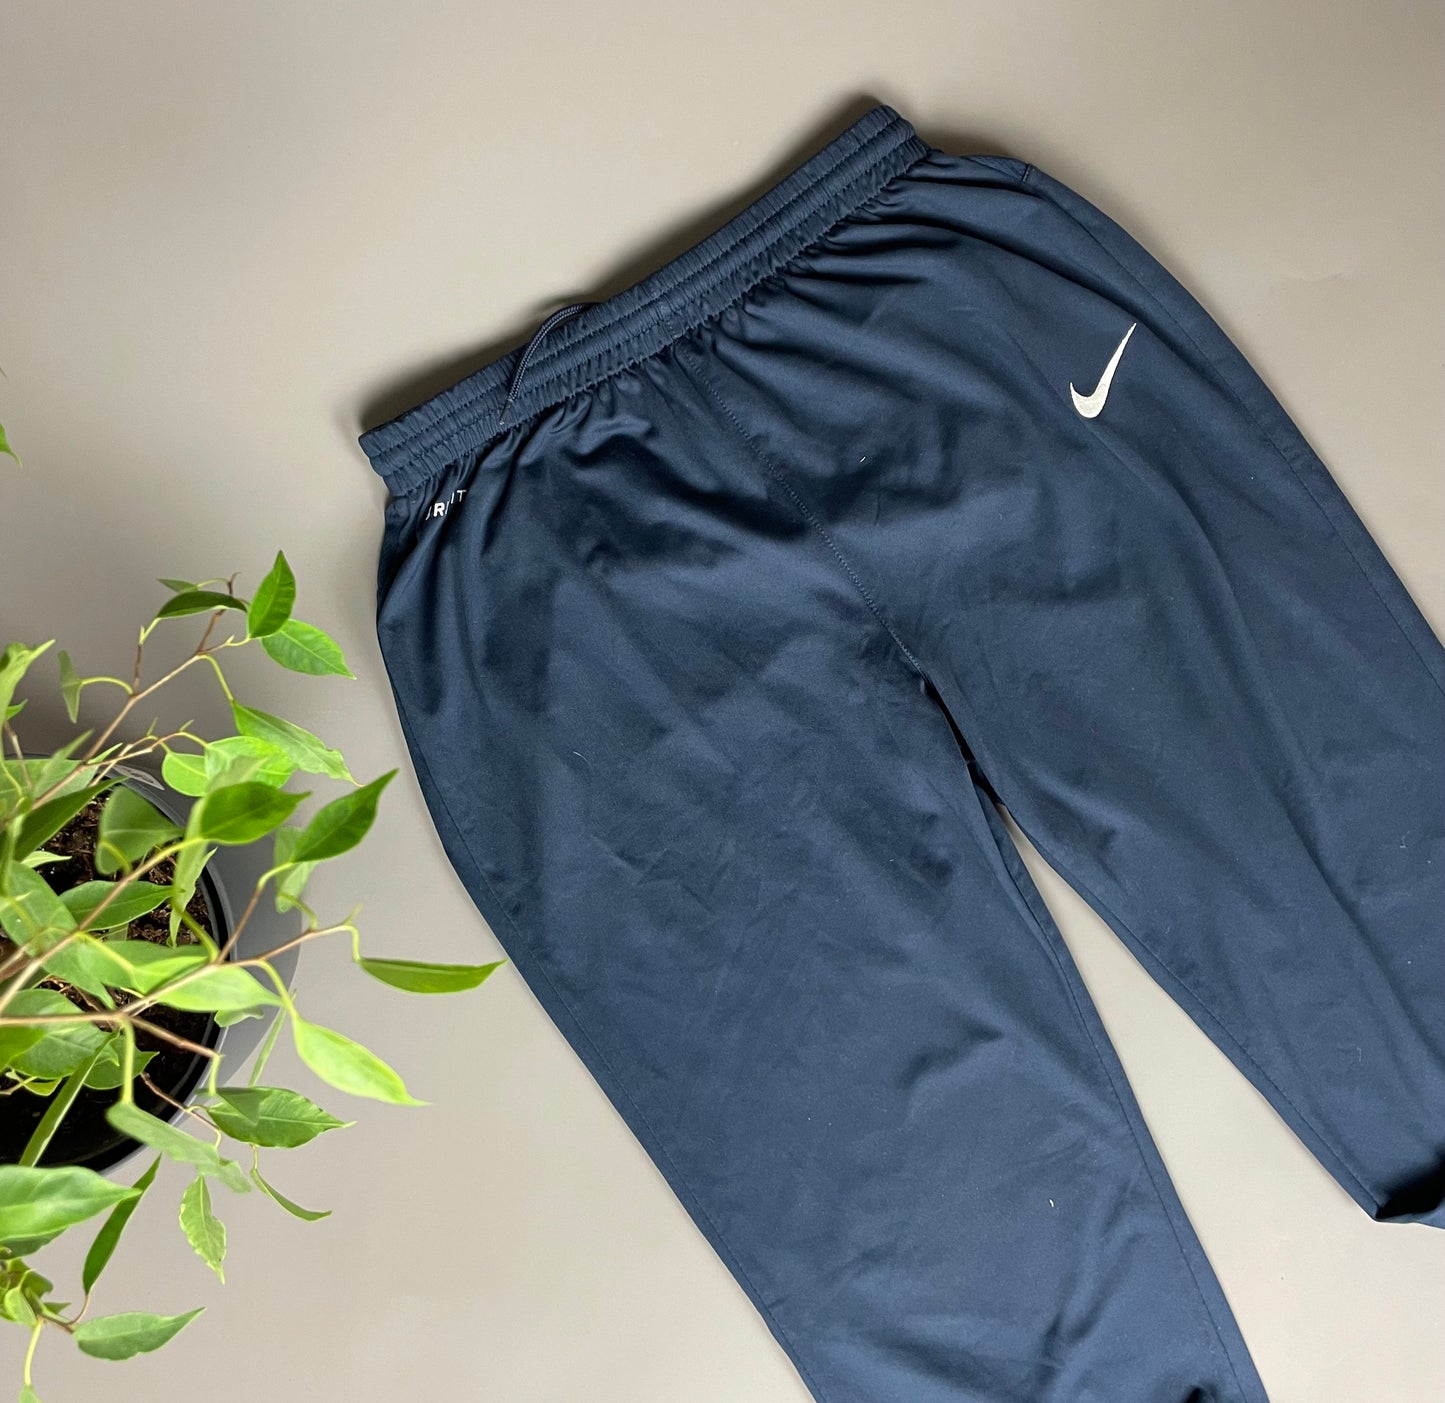 Nike Dri-Fit Track Pants (M)